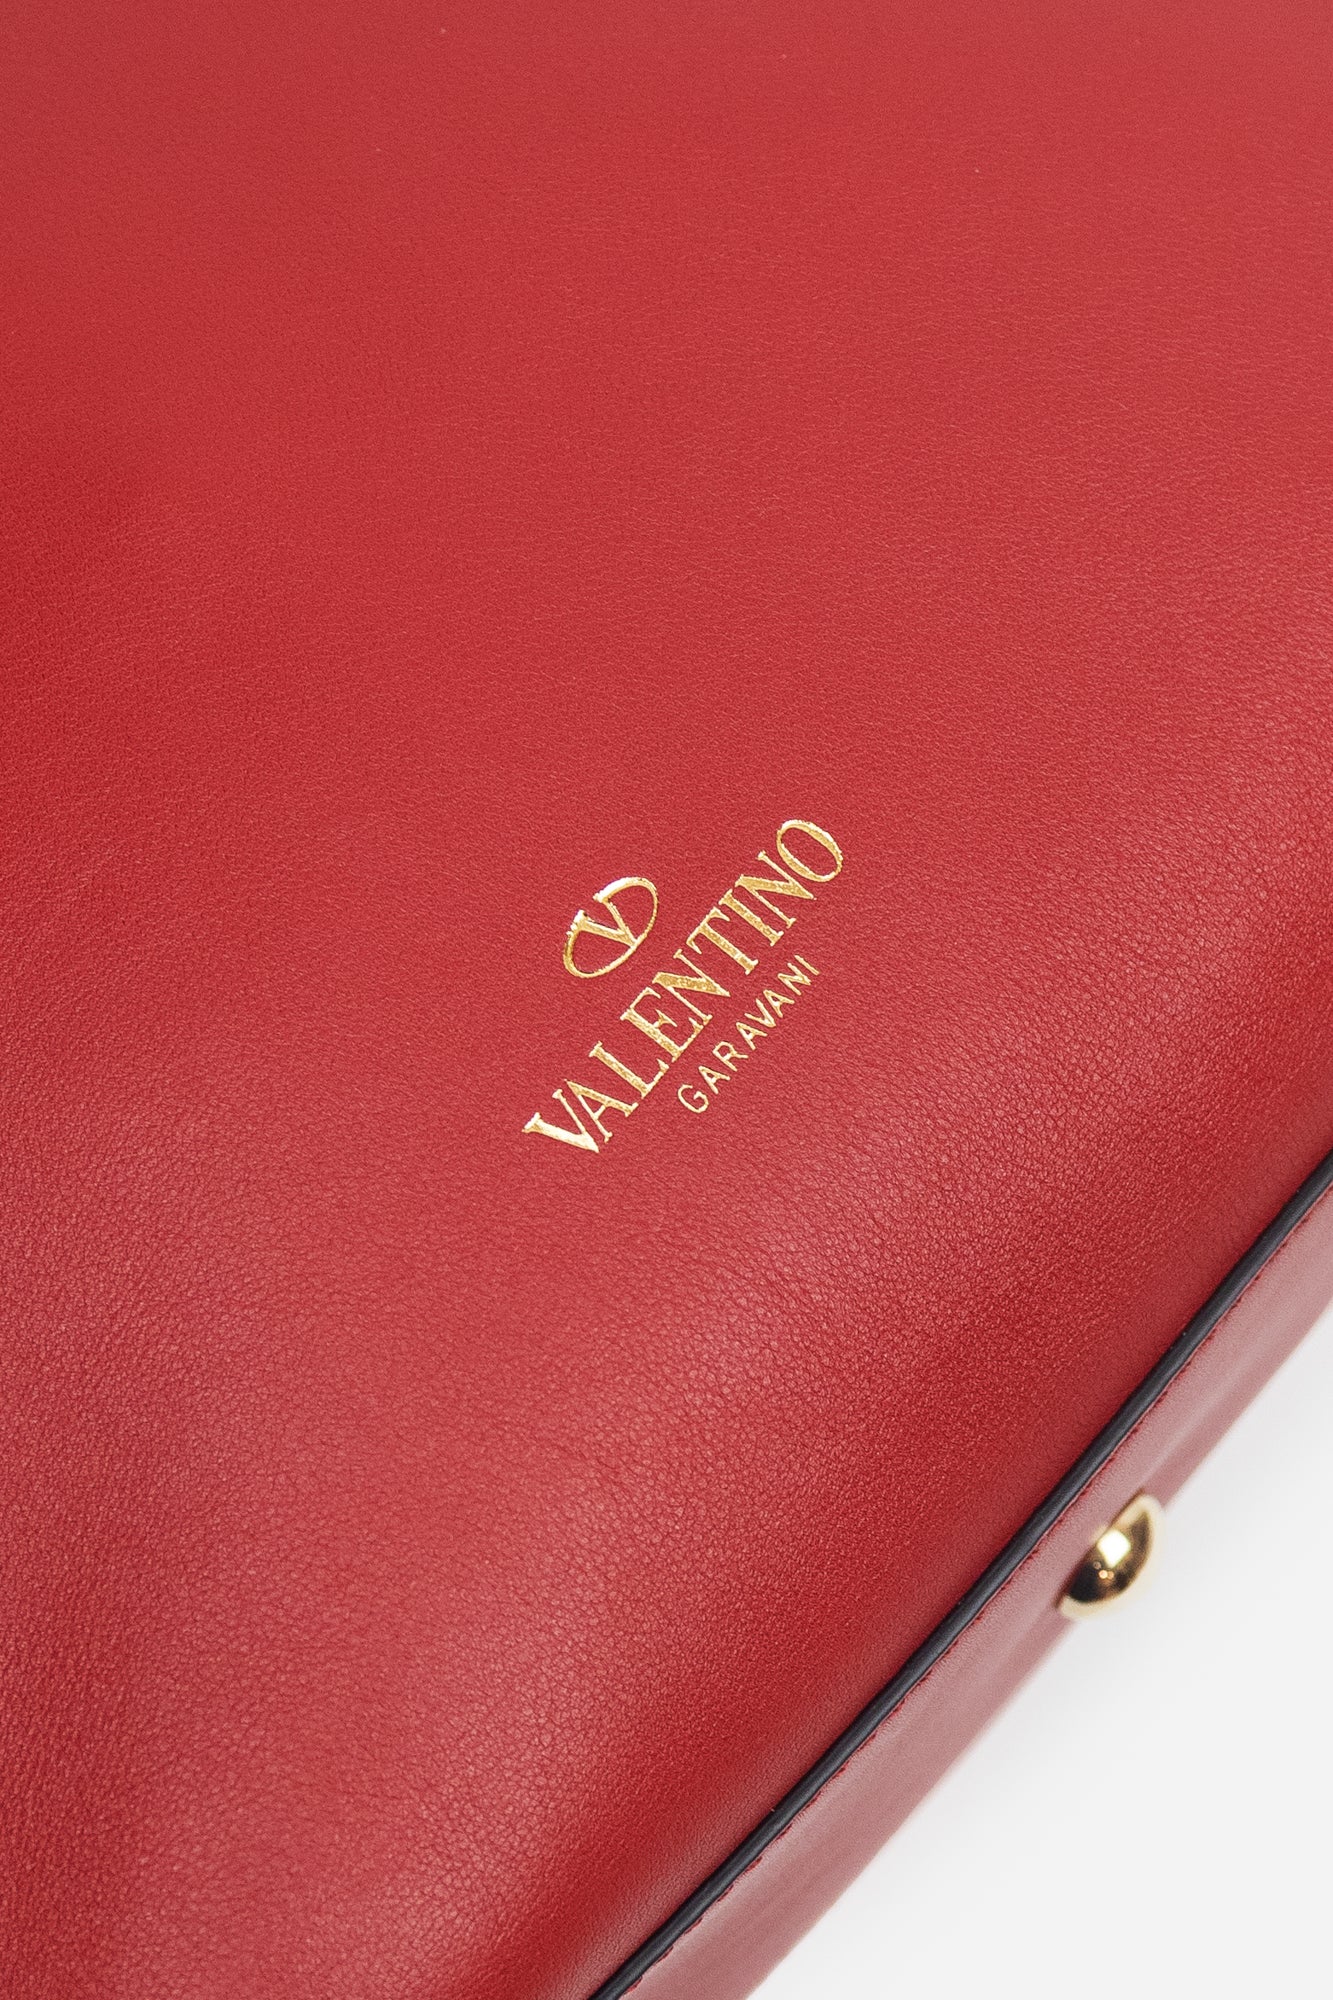 Red Studded Dome Handle Bag